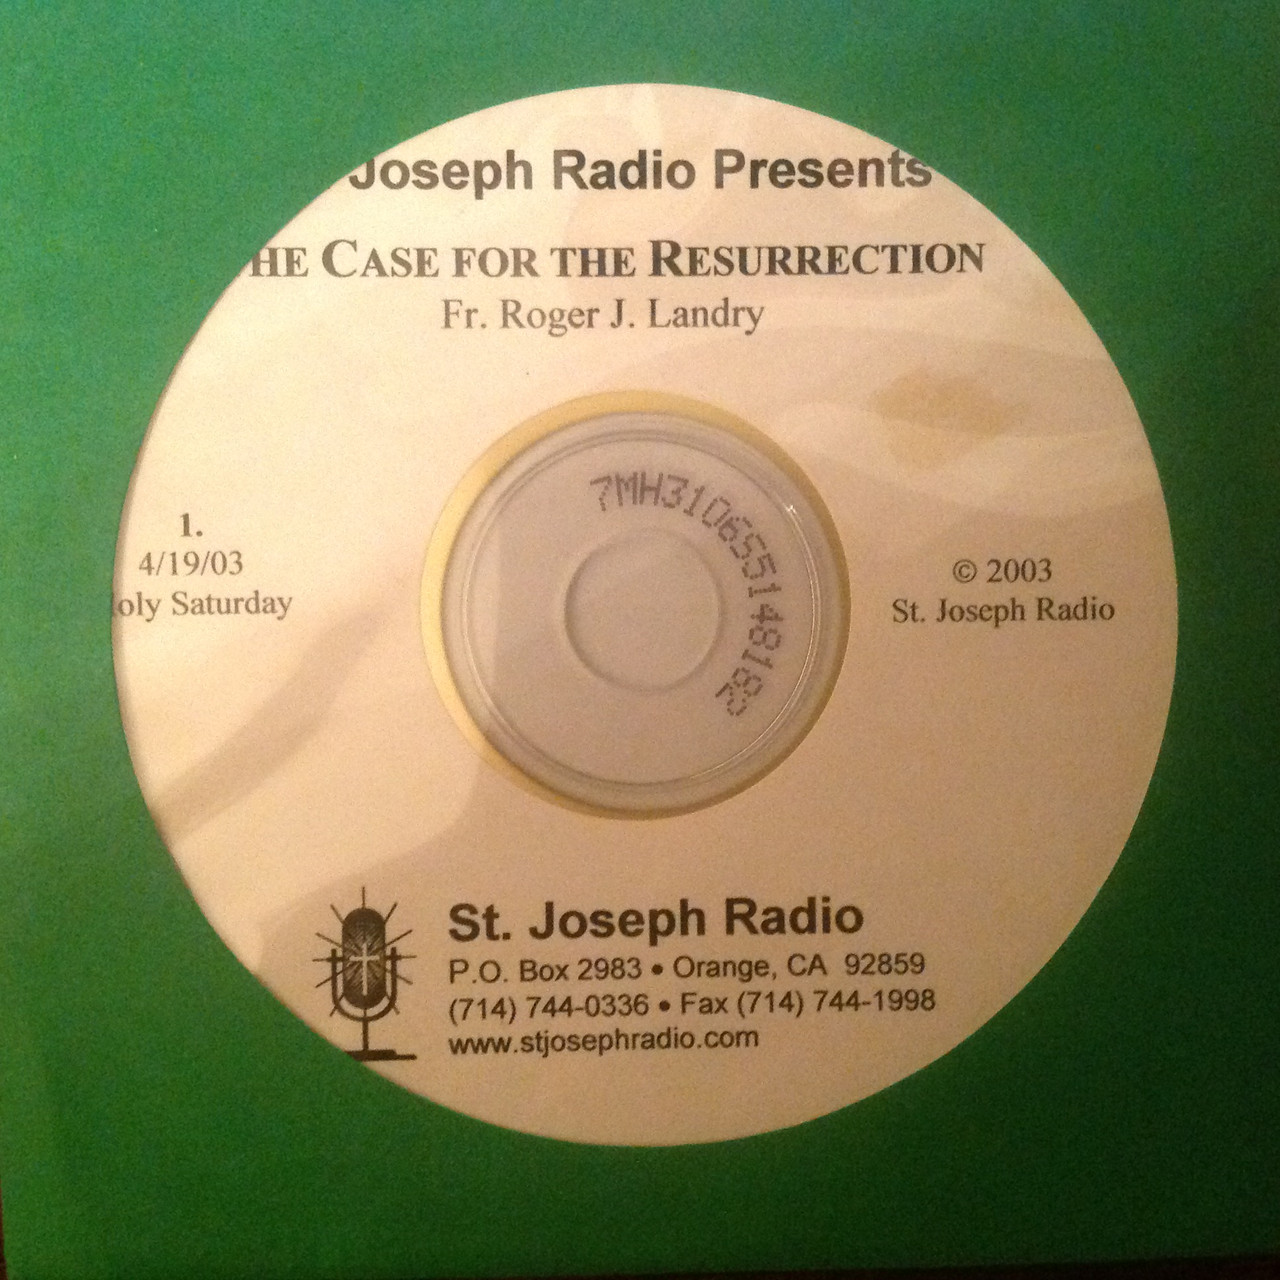 The Case for the Resurrection by Fr. Roger J. Landry CD